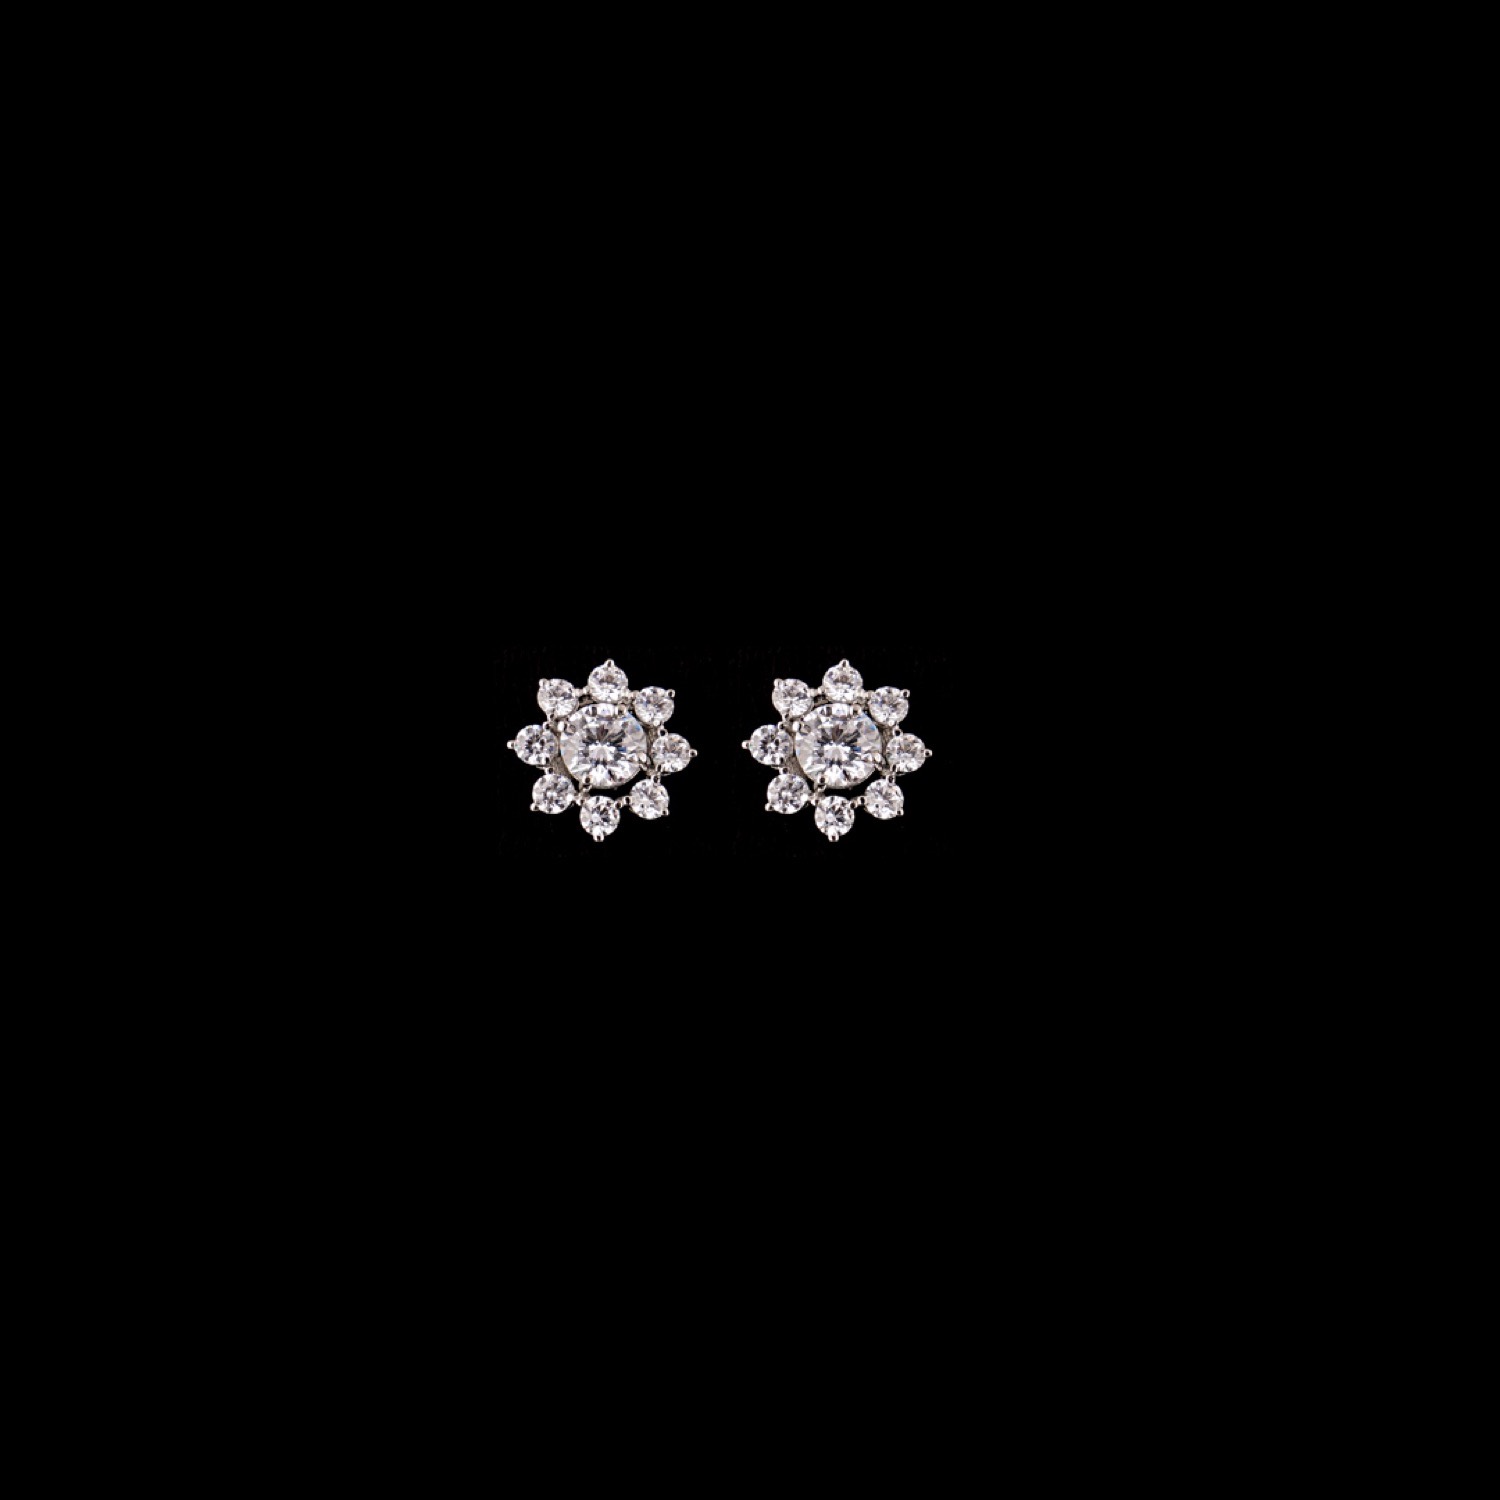 varam_earrings_102022_round_cut_white_stone_flower_shaped_silver_earrings-1